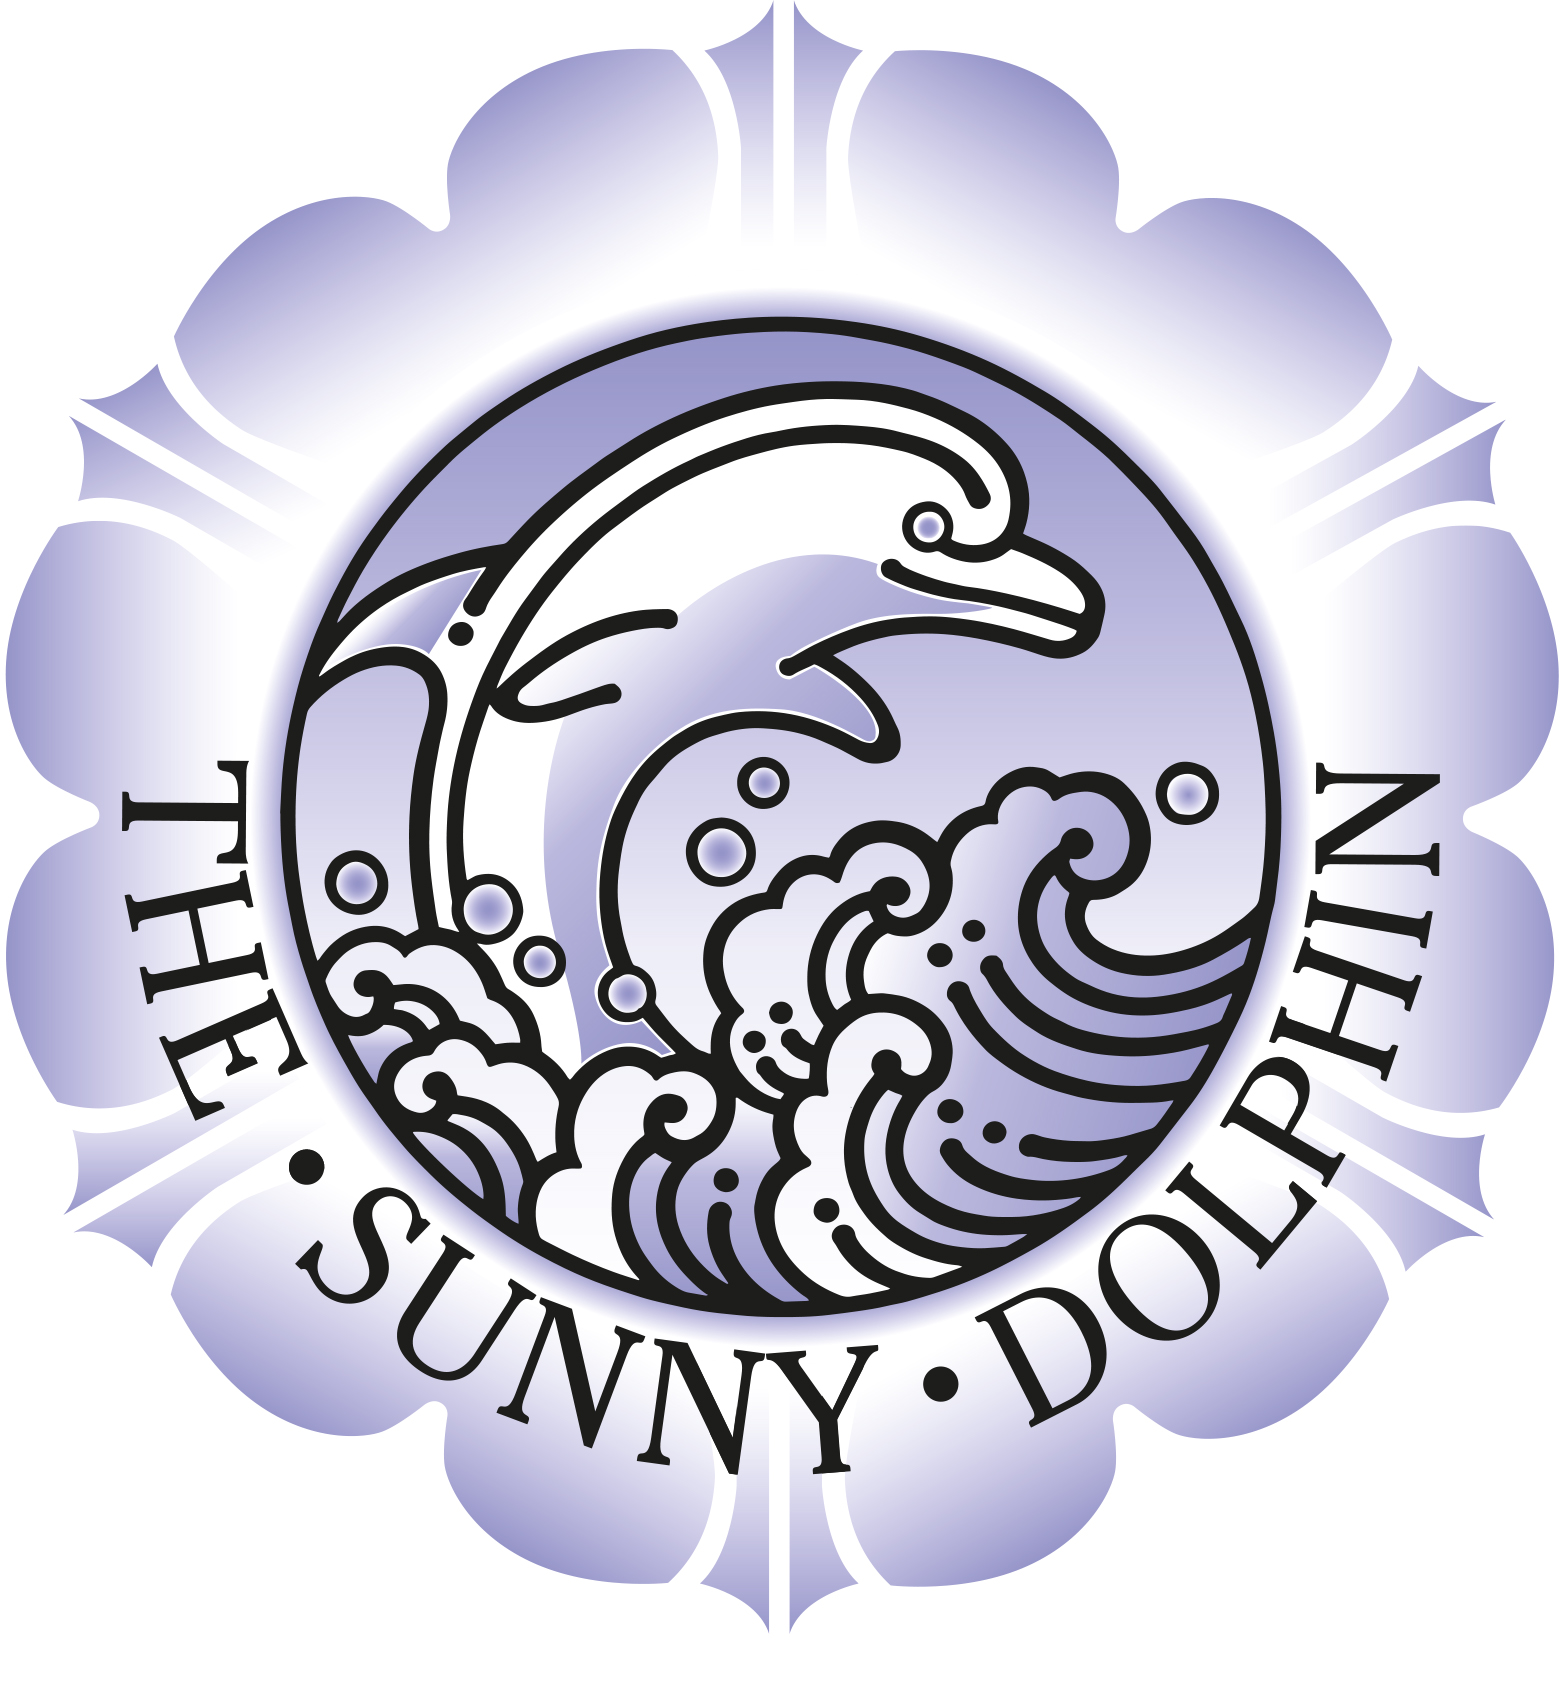 THE SUNNY DOLPHIN